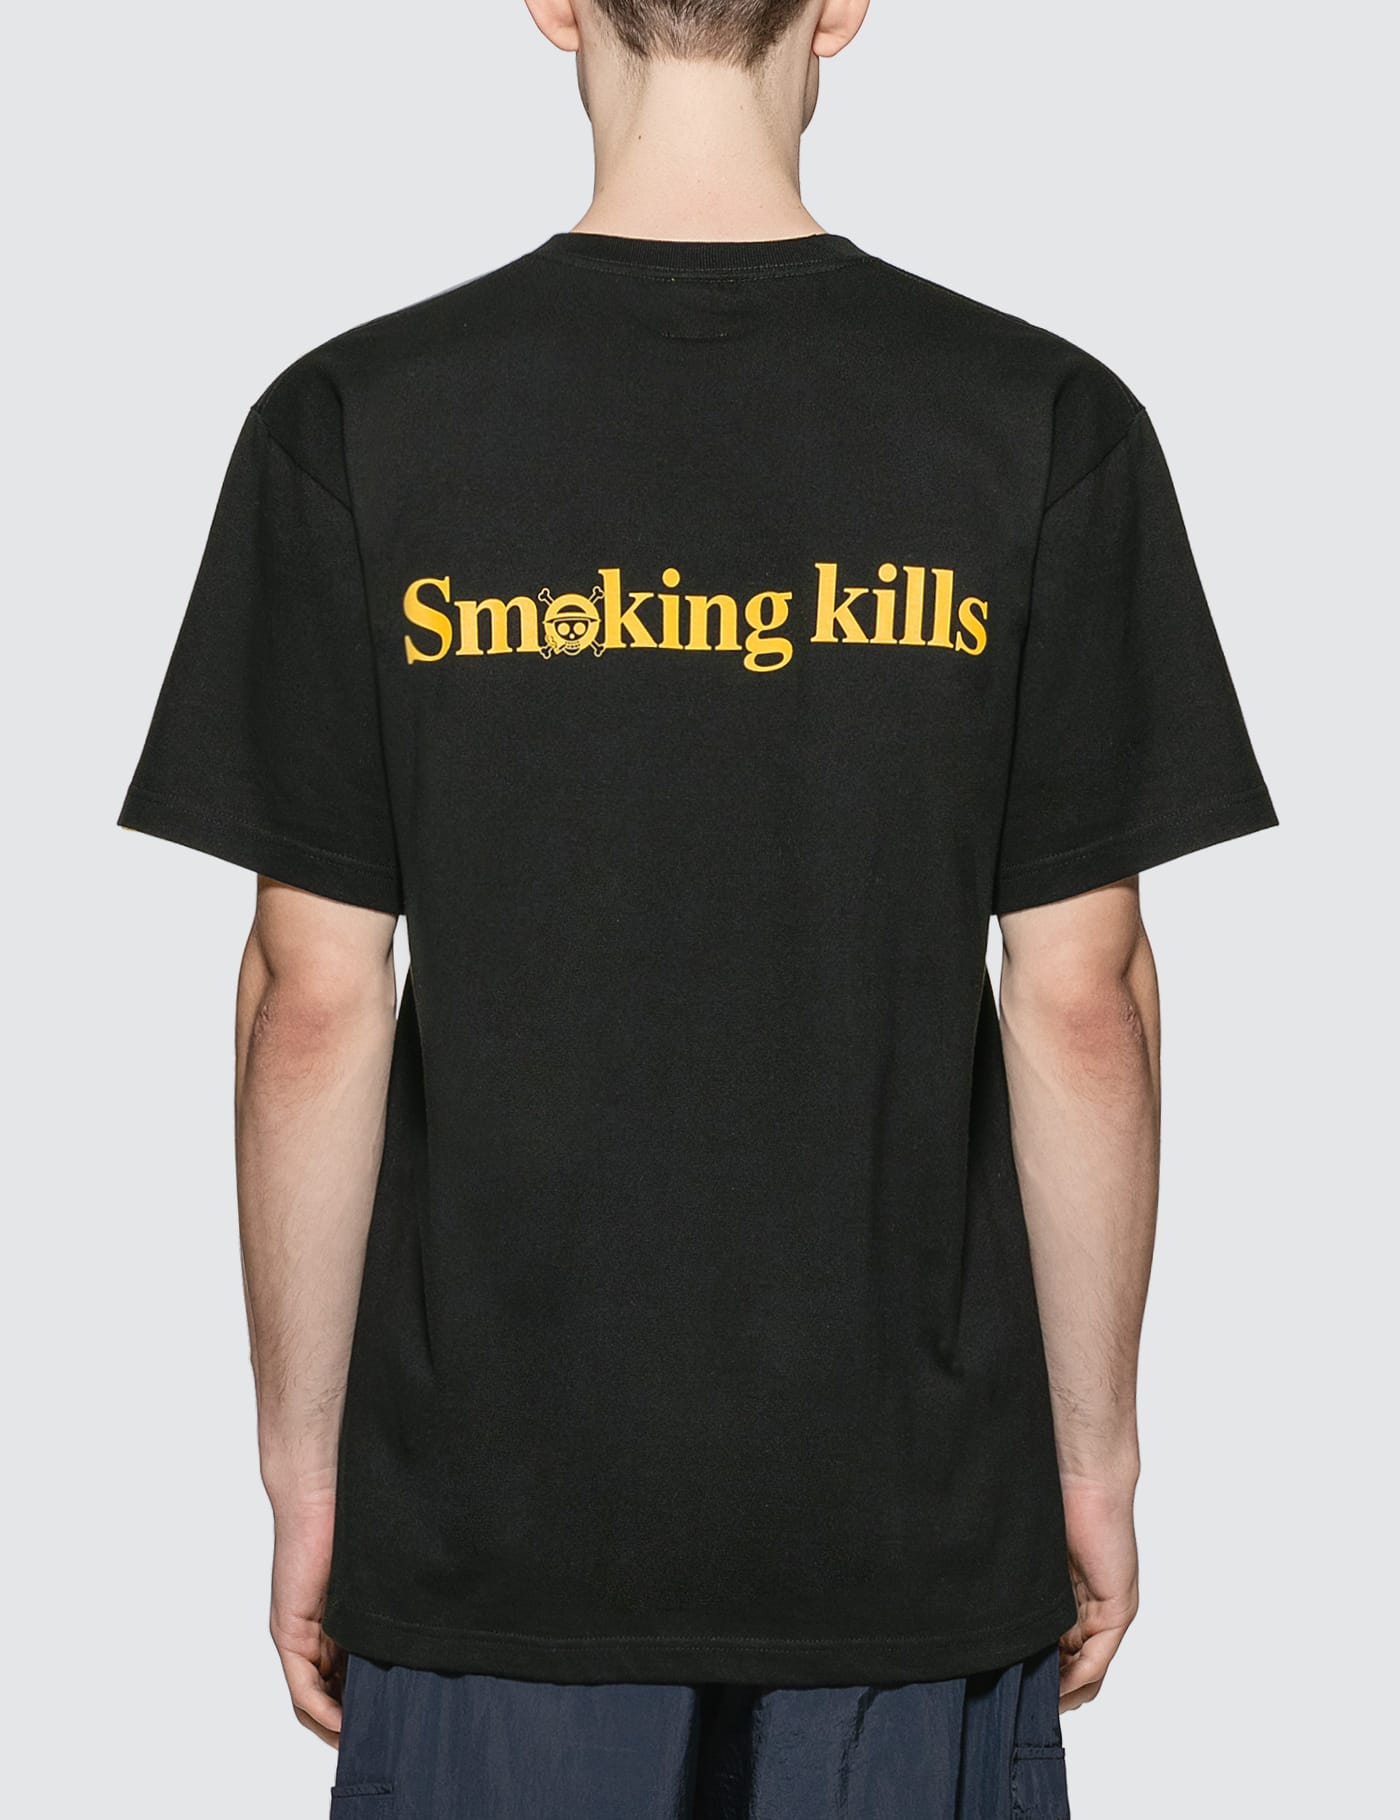 FR2 - #FR2 X One Piece Sanji Smokers T-shirt | HBX - ハイプ ...